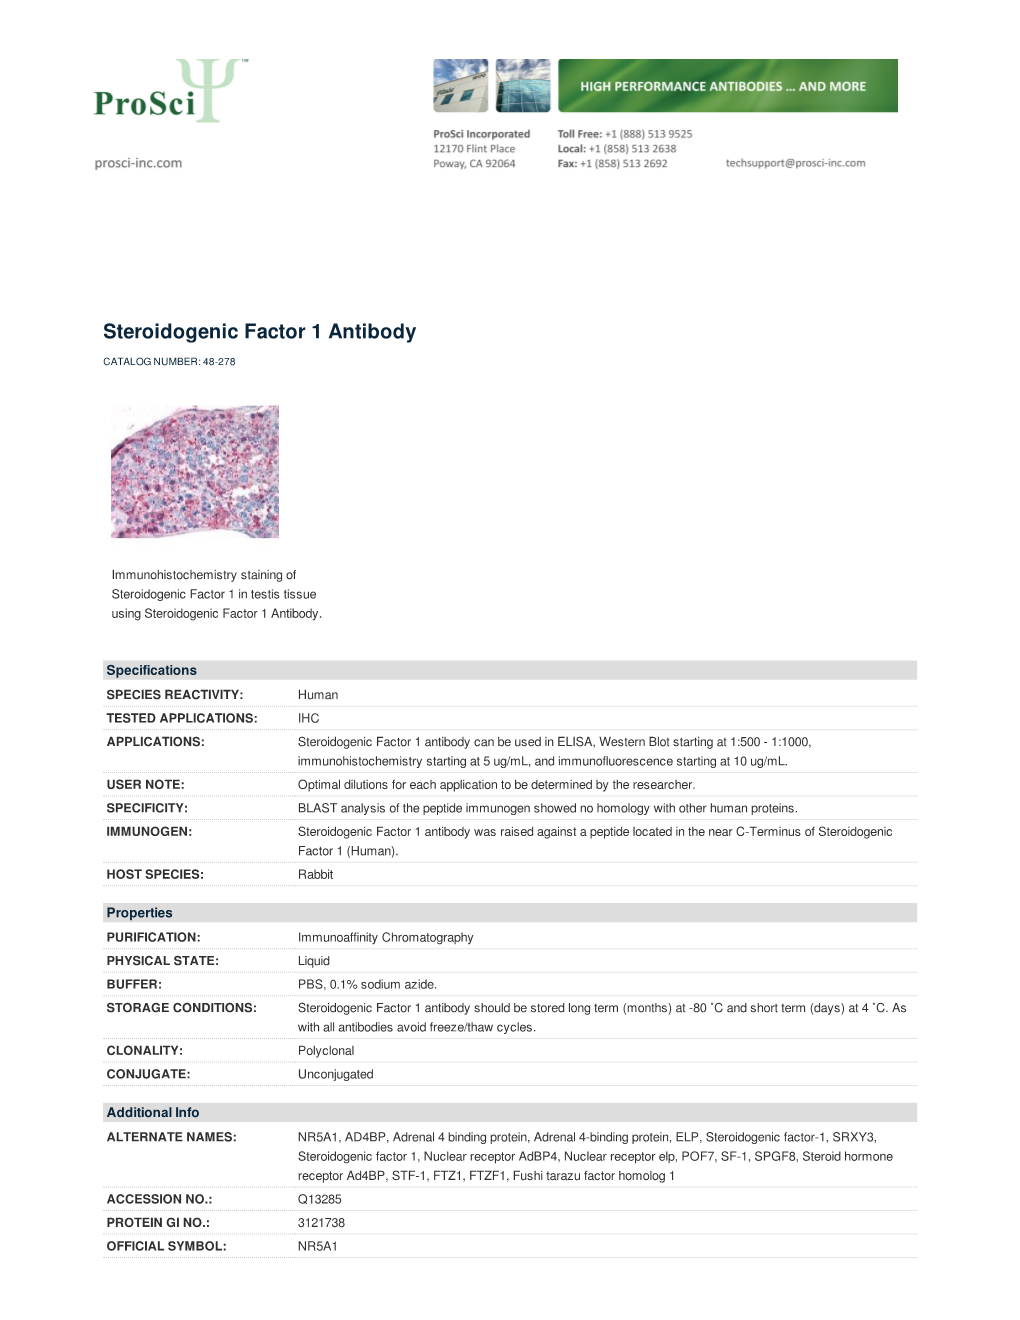 Steroidogenic Factor 1 Antibody